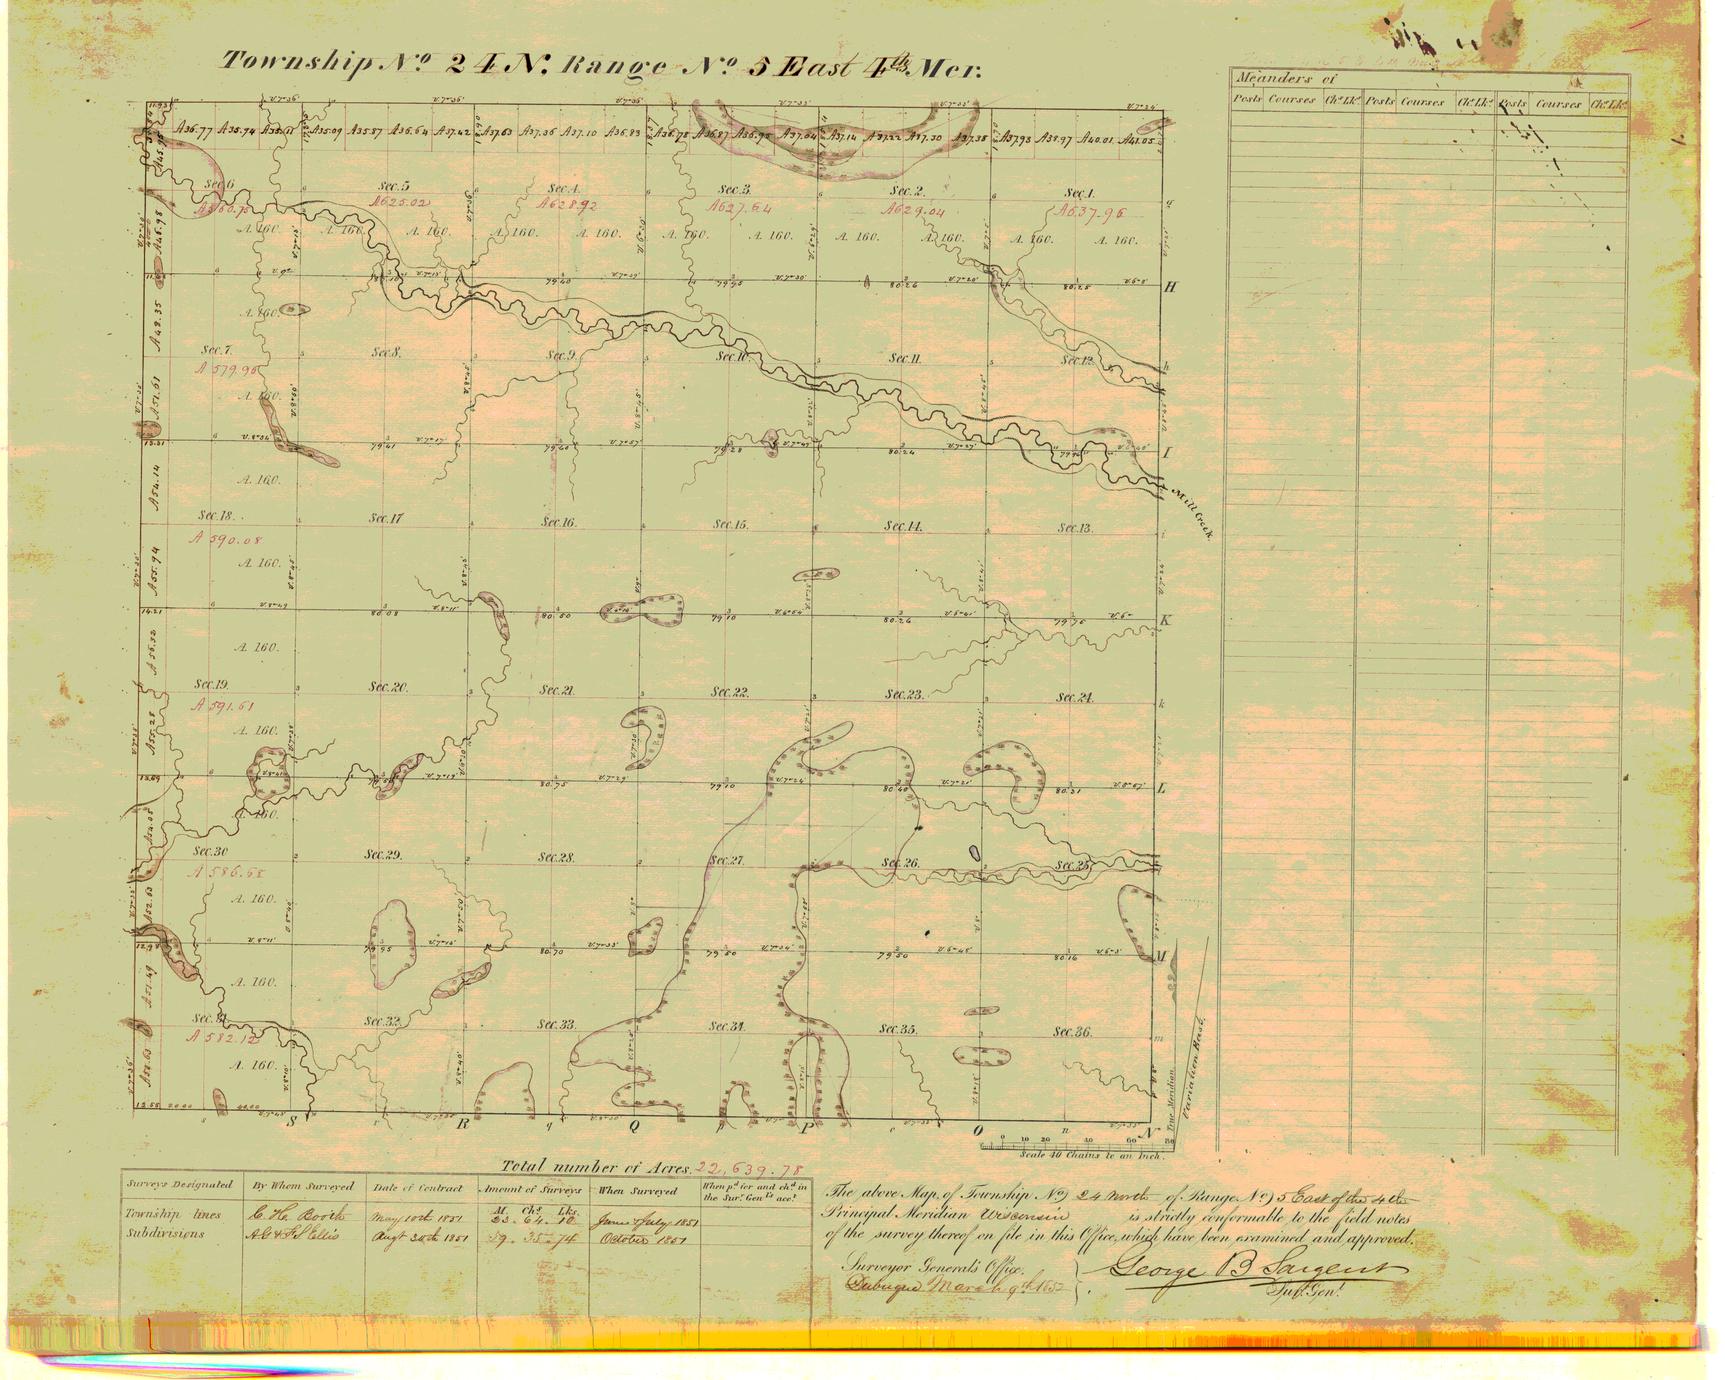 [Public Land Survey System map: Wisconsin Township 24 North, Range 05 East]